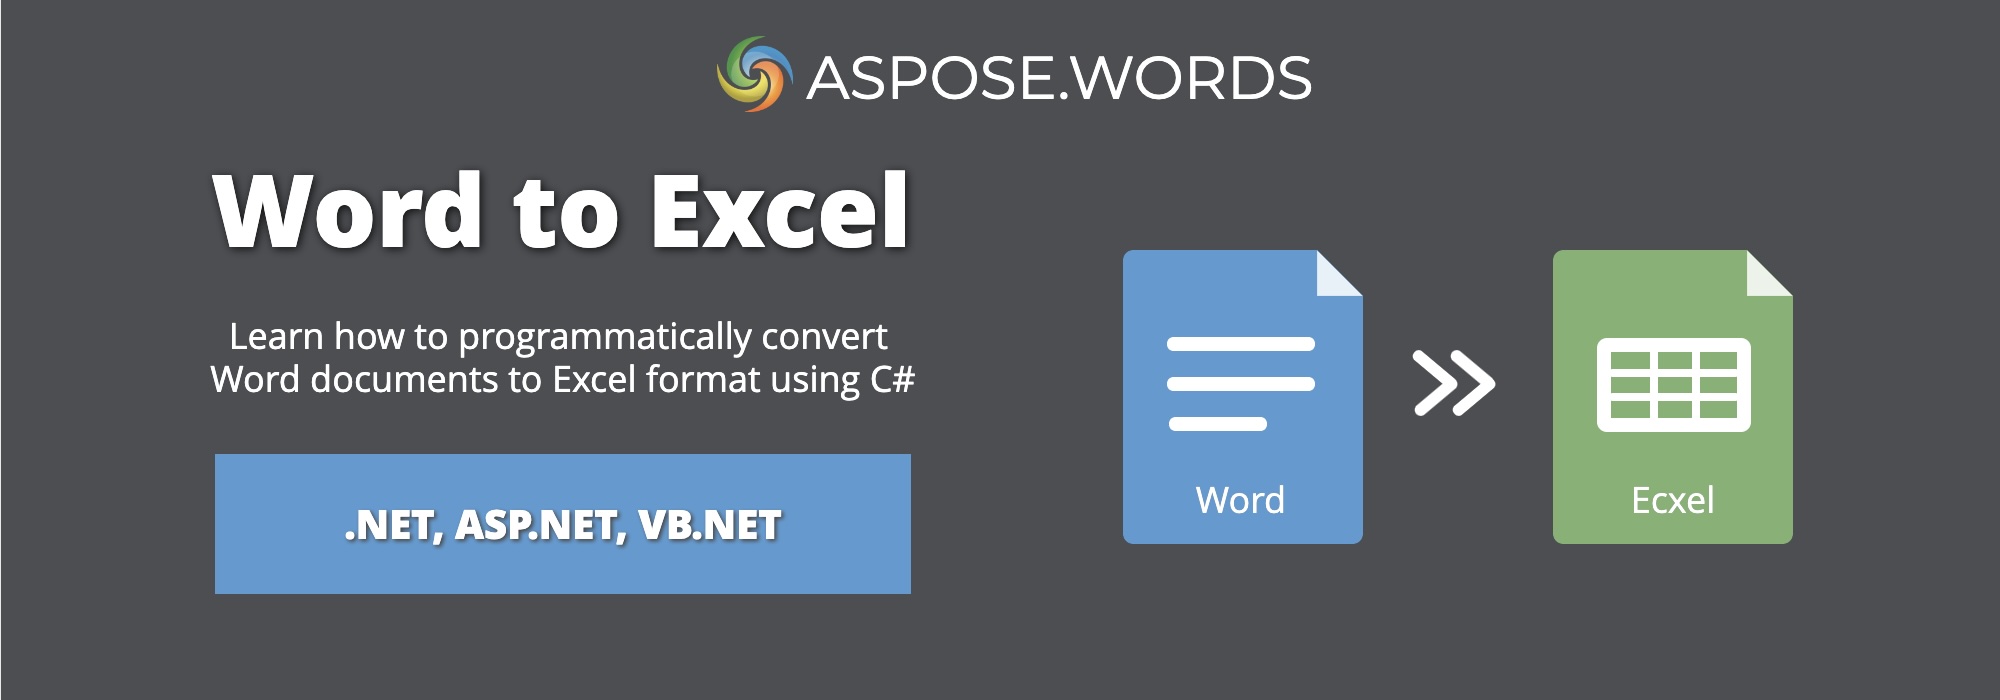 Convert Word to Excel C# | Convert DOCX to XLSX C#